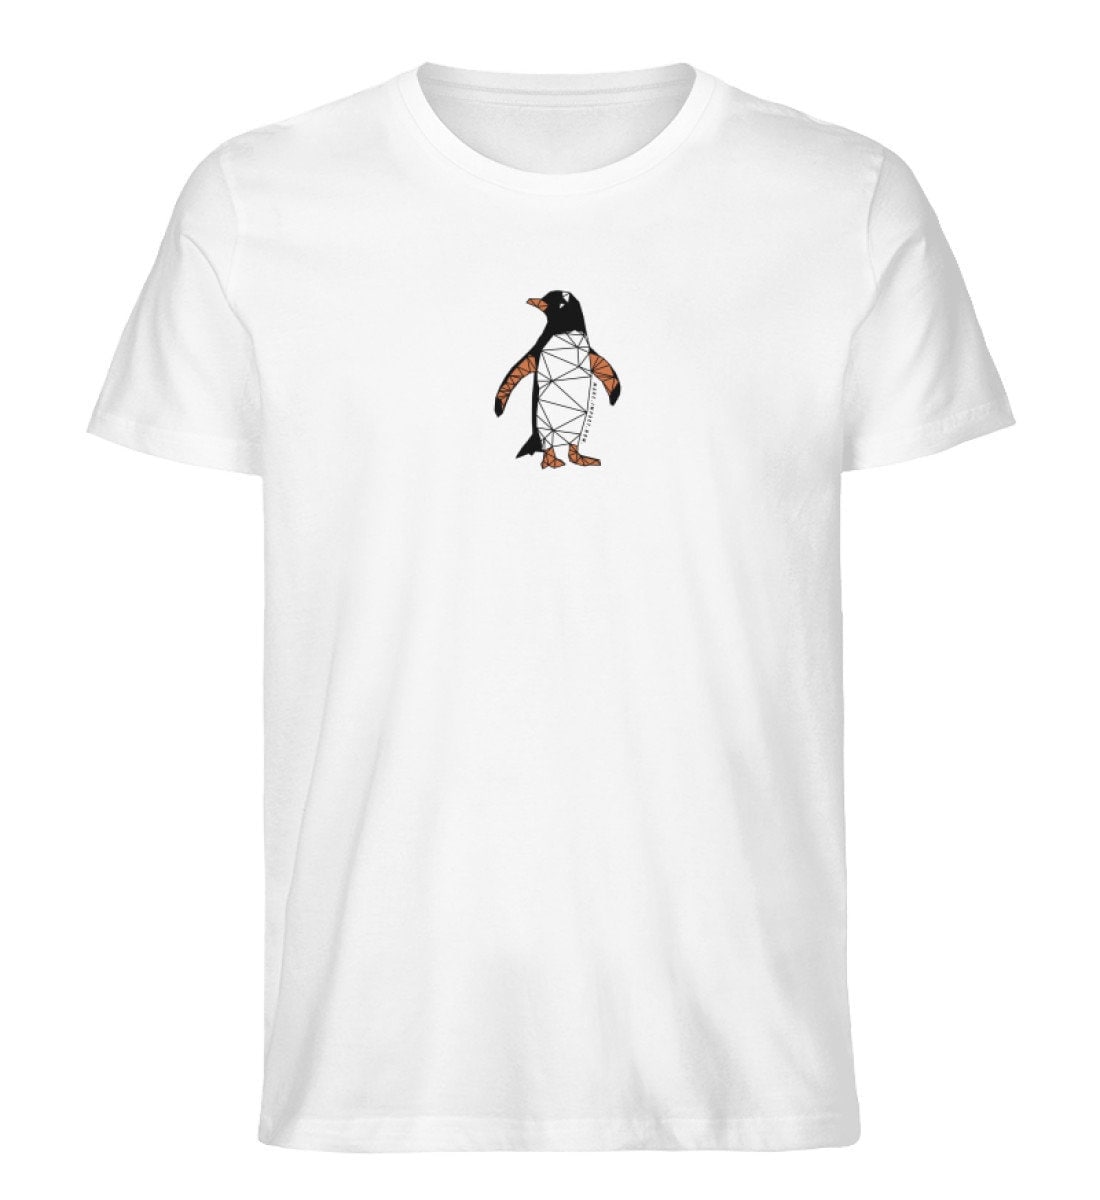 Pinguin shirt - .de